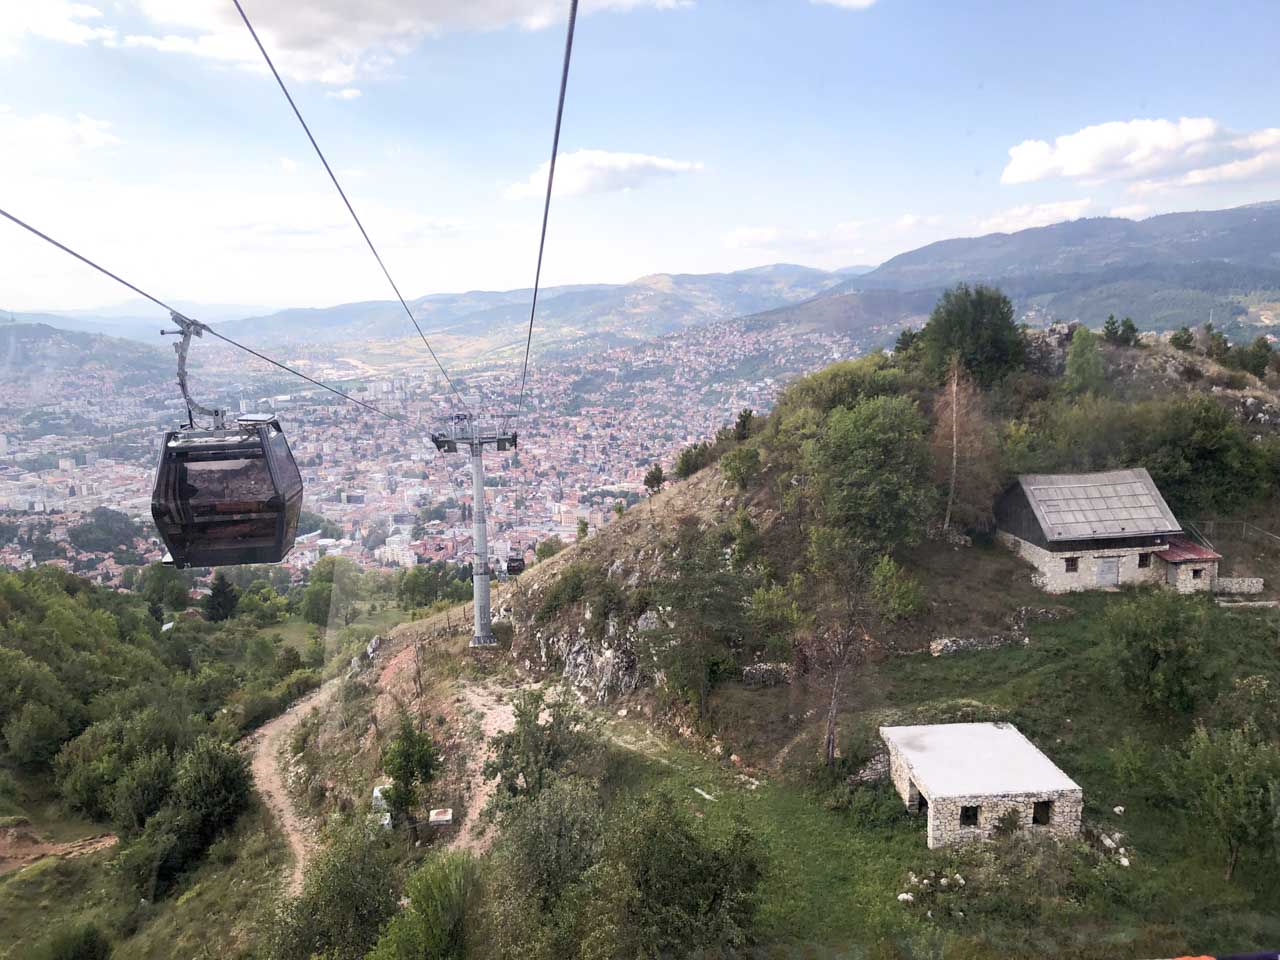 Trebević cable car in Sarajevo